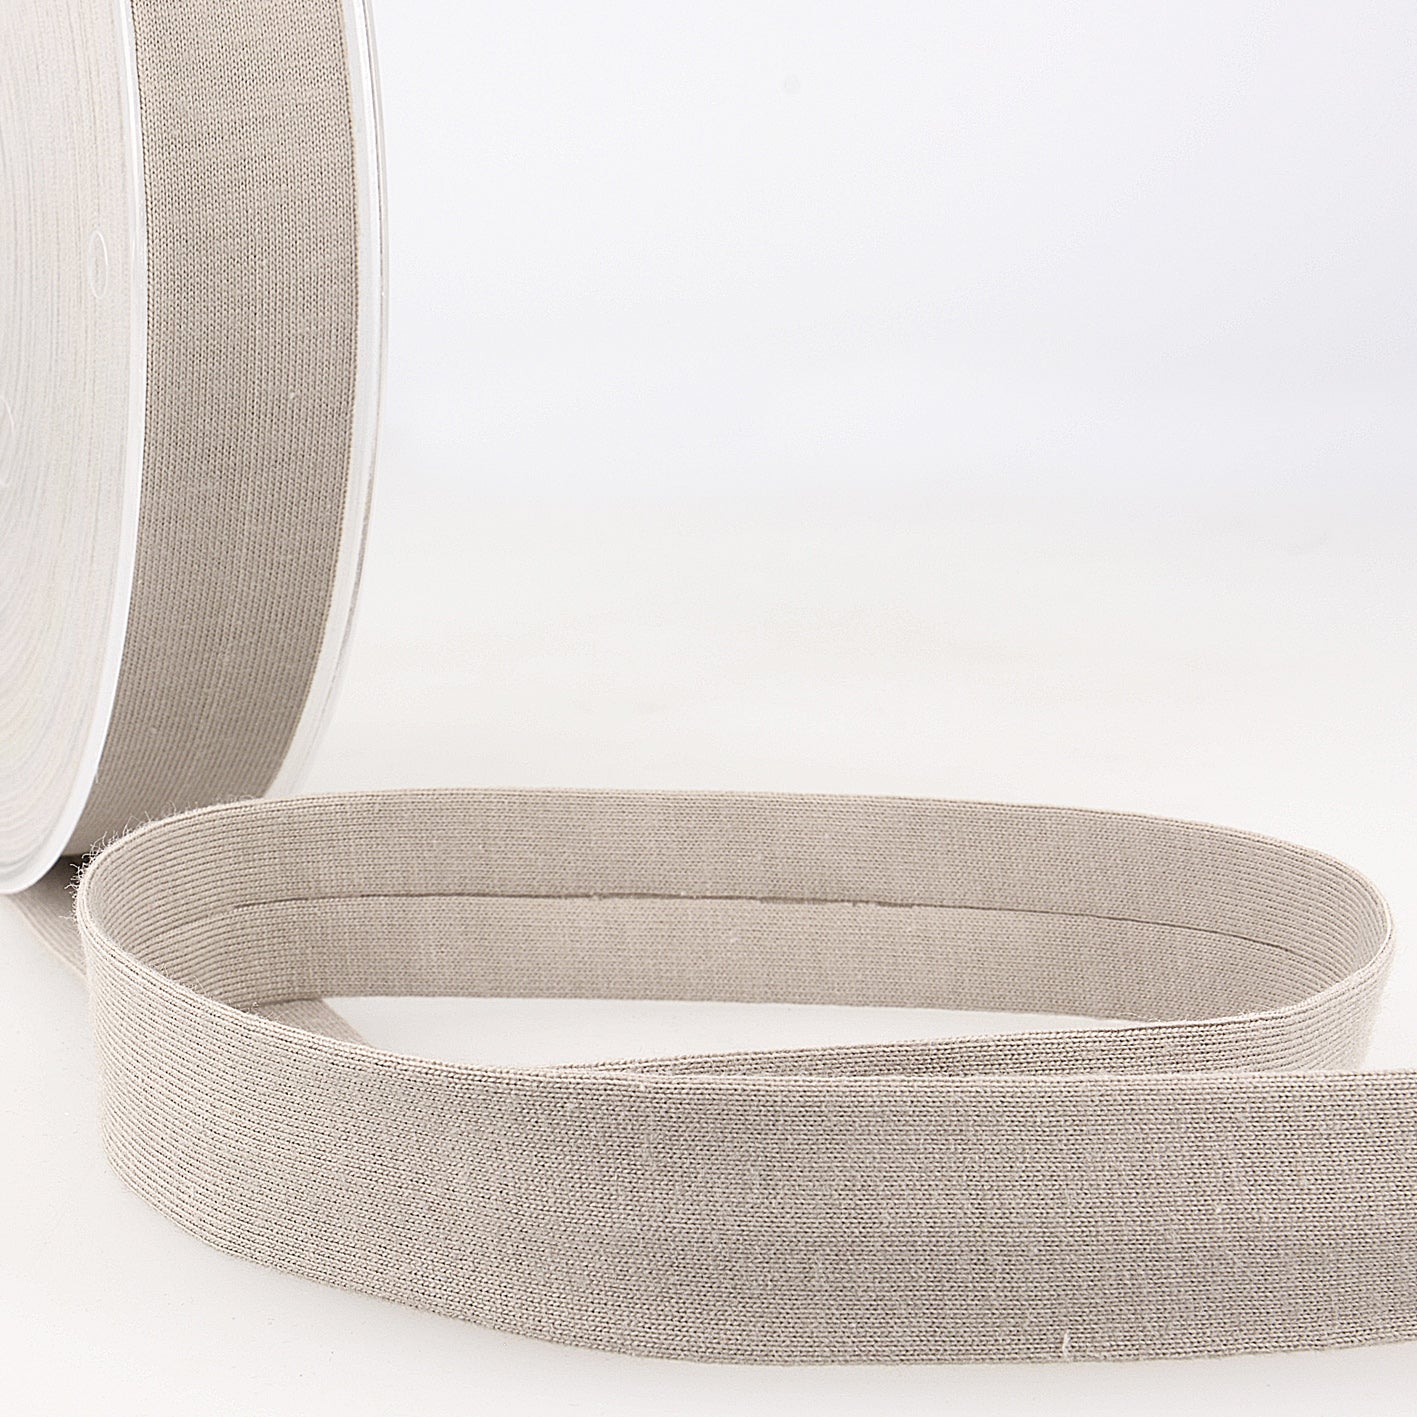 20mm Cotton Jersey Knit Bias Binding